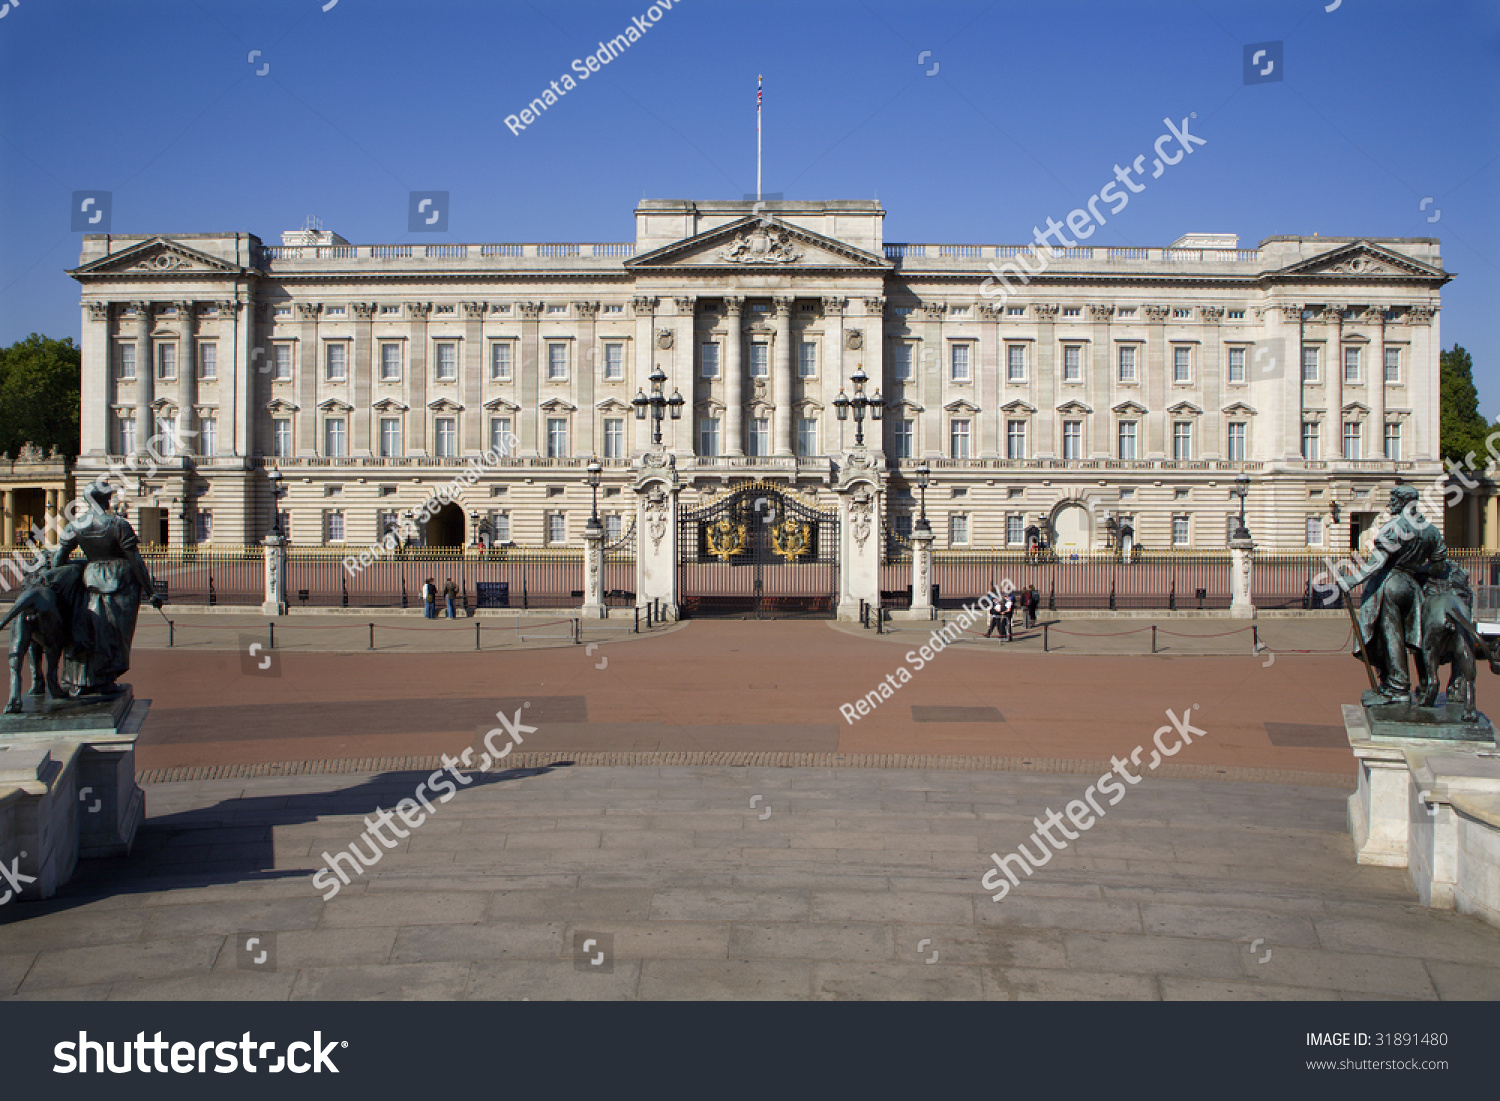 London - Buckingham palace #31891480